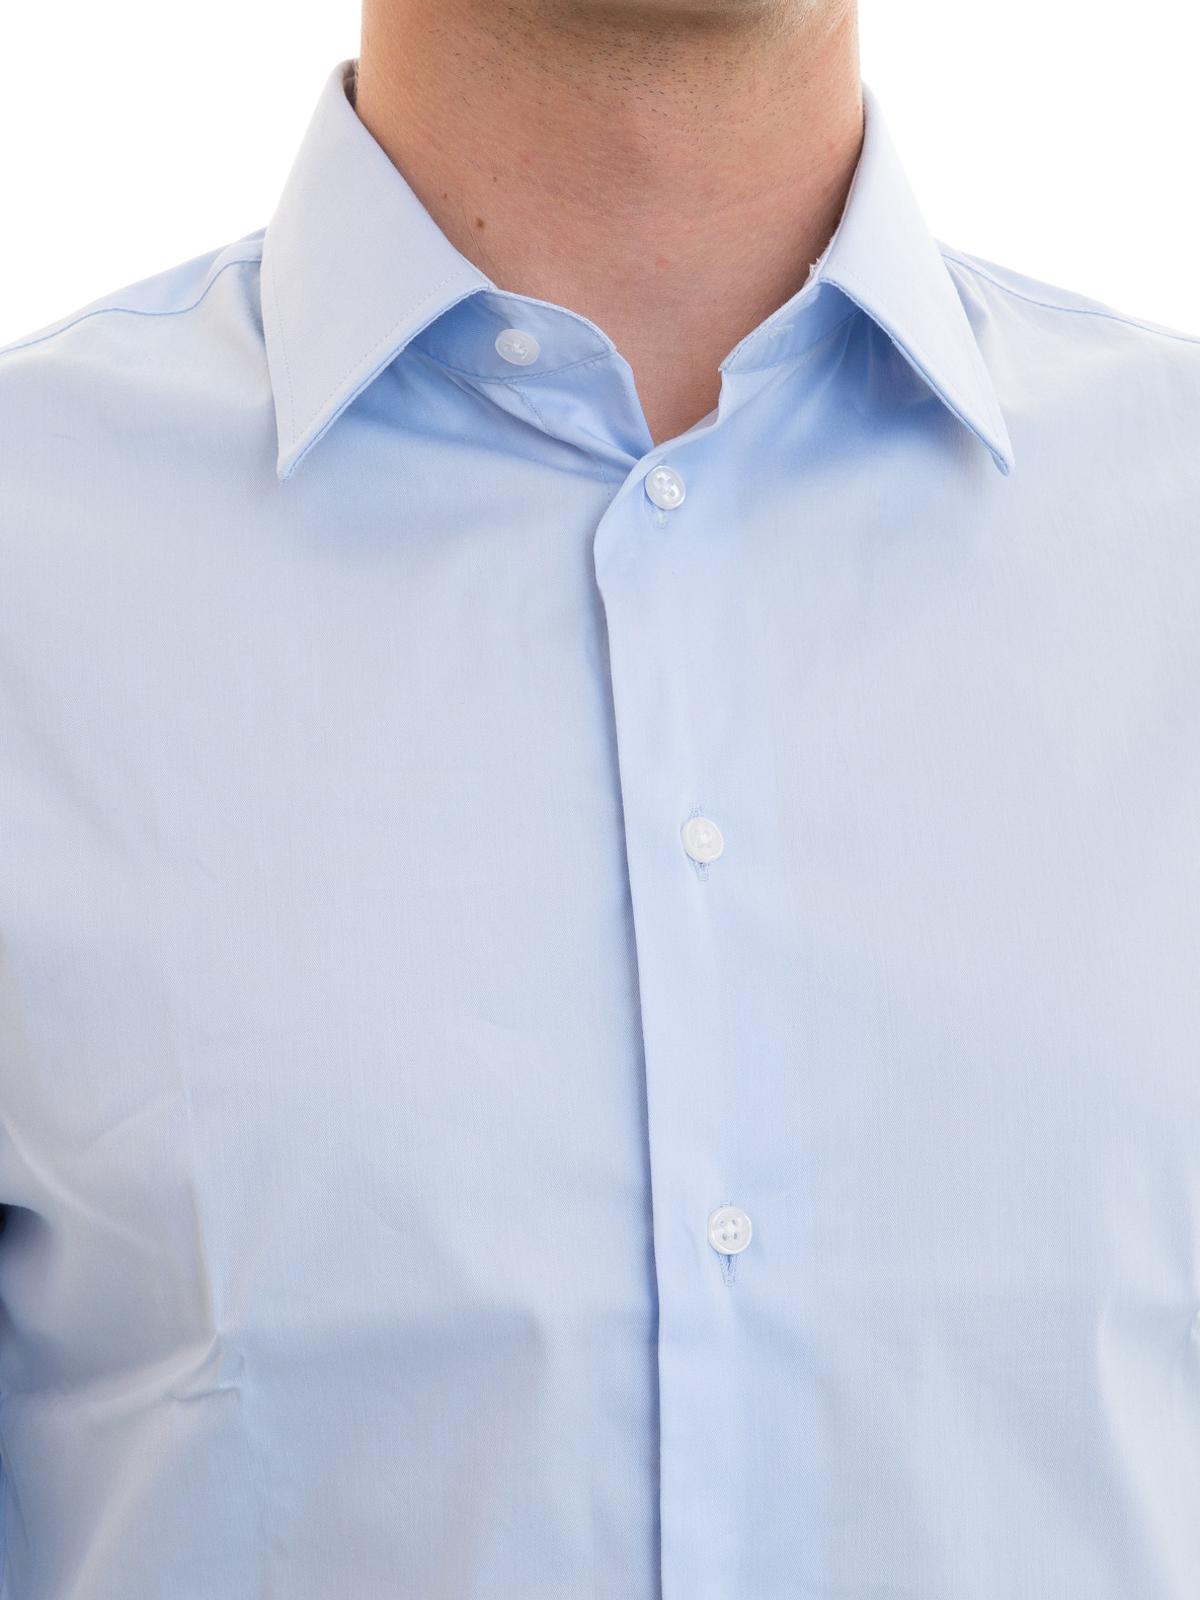 Armani Cotton Blend Modern Fit Shirt in Light Blue (Blue) for Men - Lyst